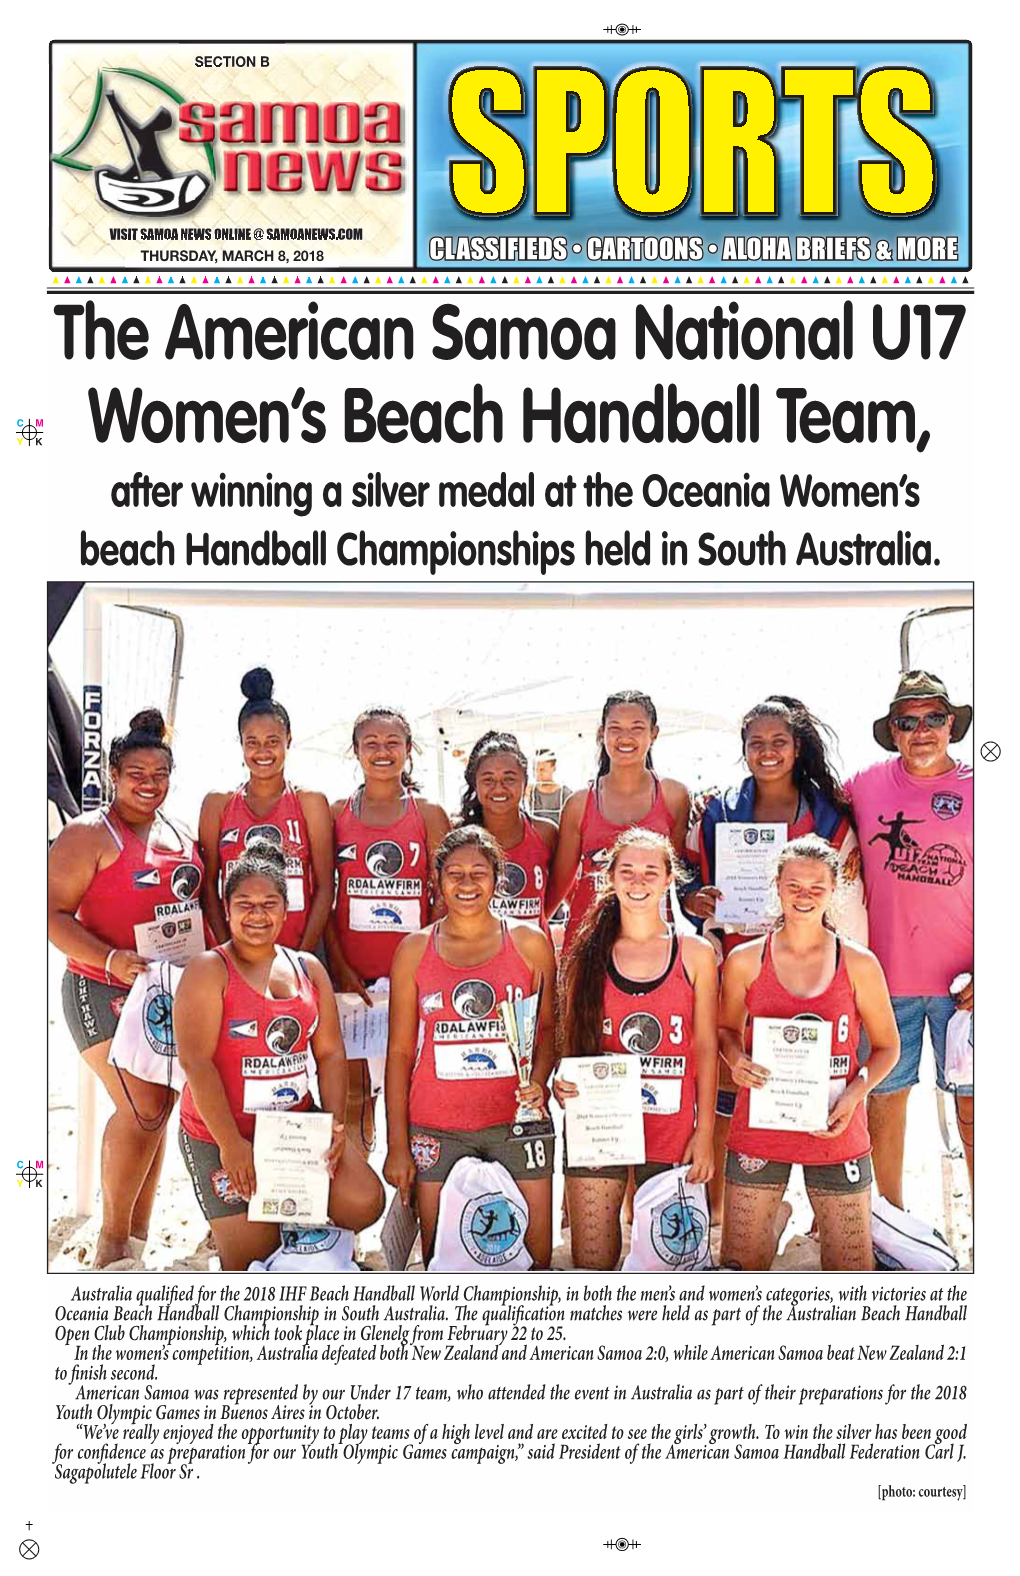 The American Samoa National U17 Women's Beach Handball Team